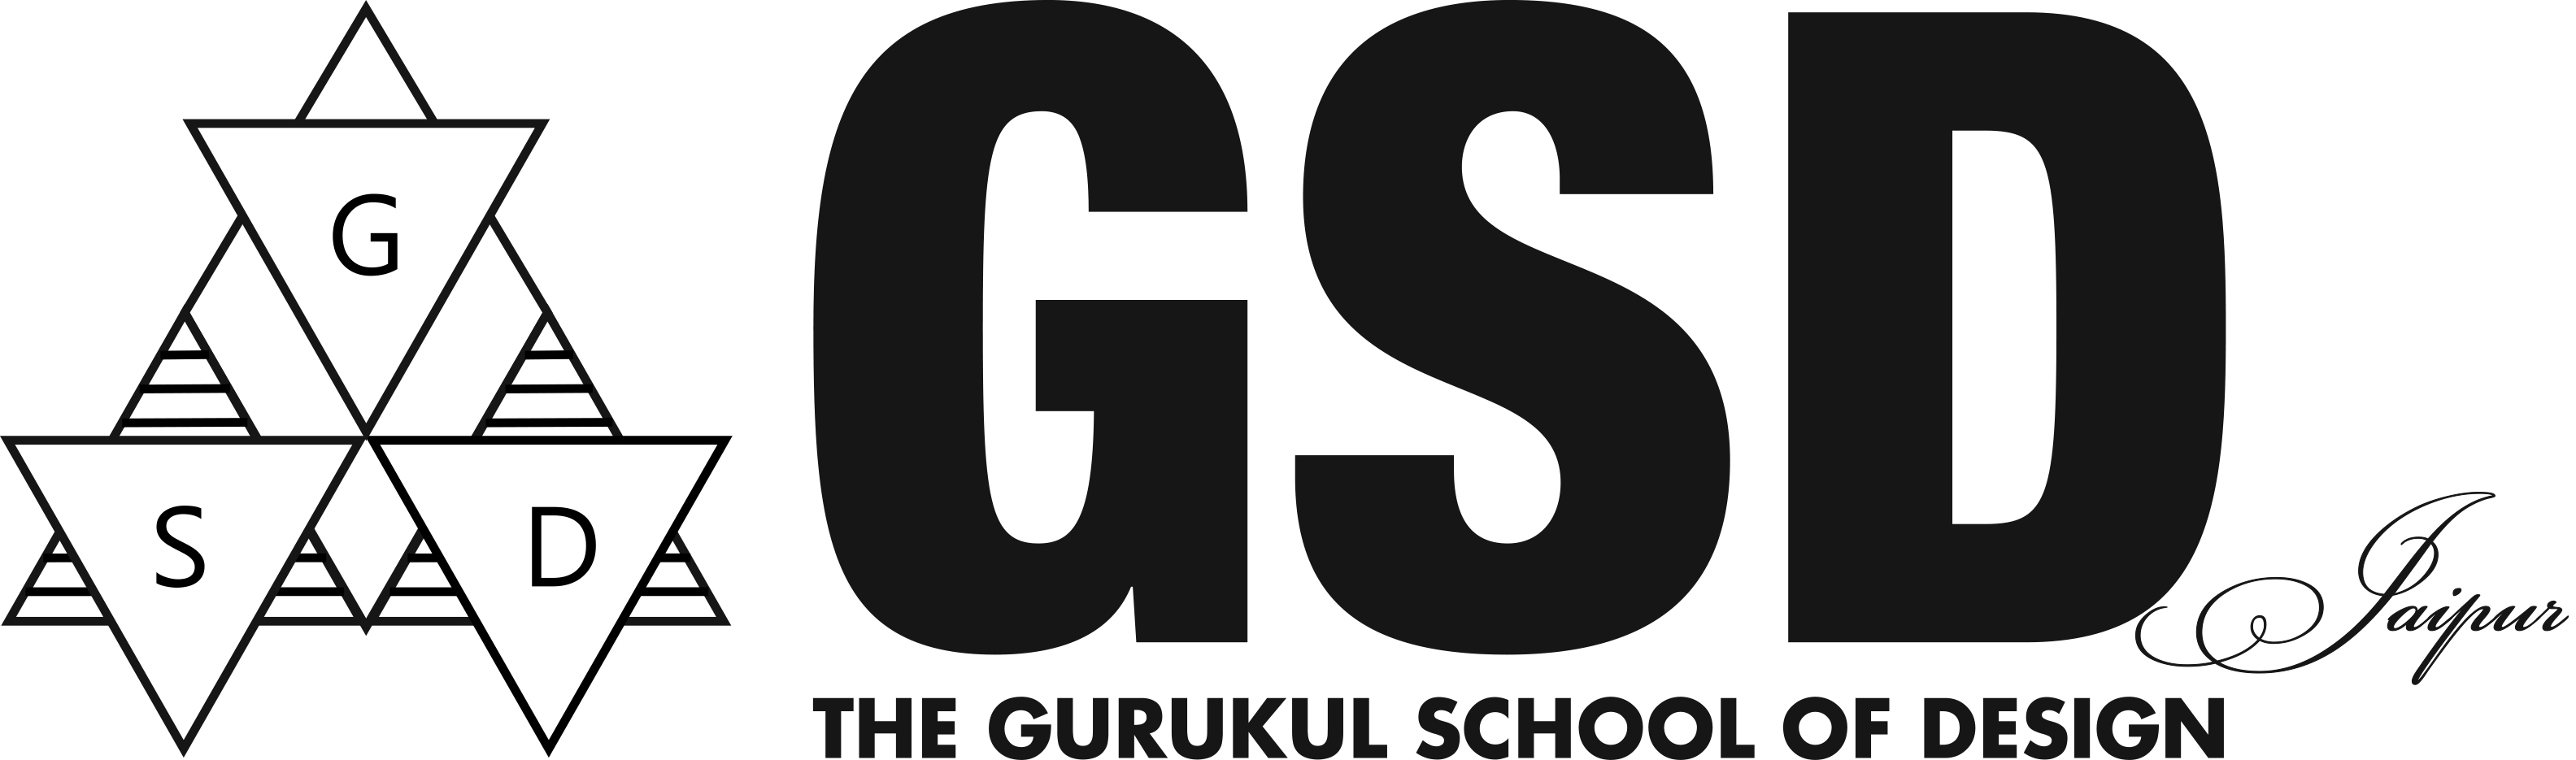 The Gurukul School of Design, Jaipur